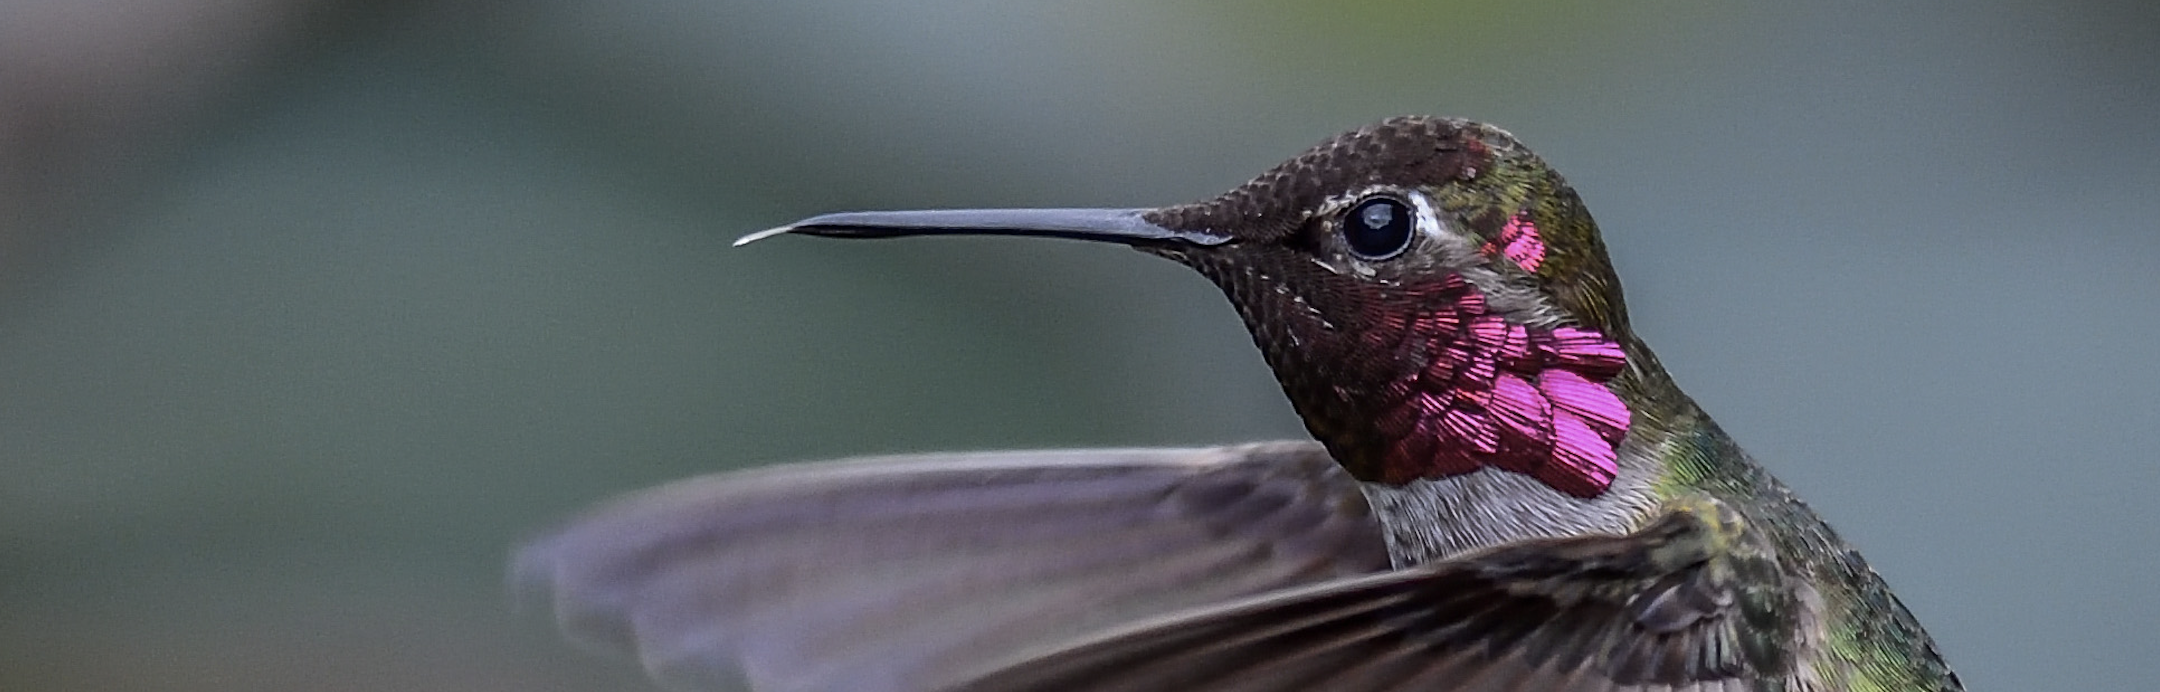 annas hummingbird